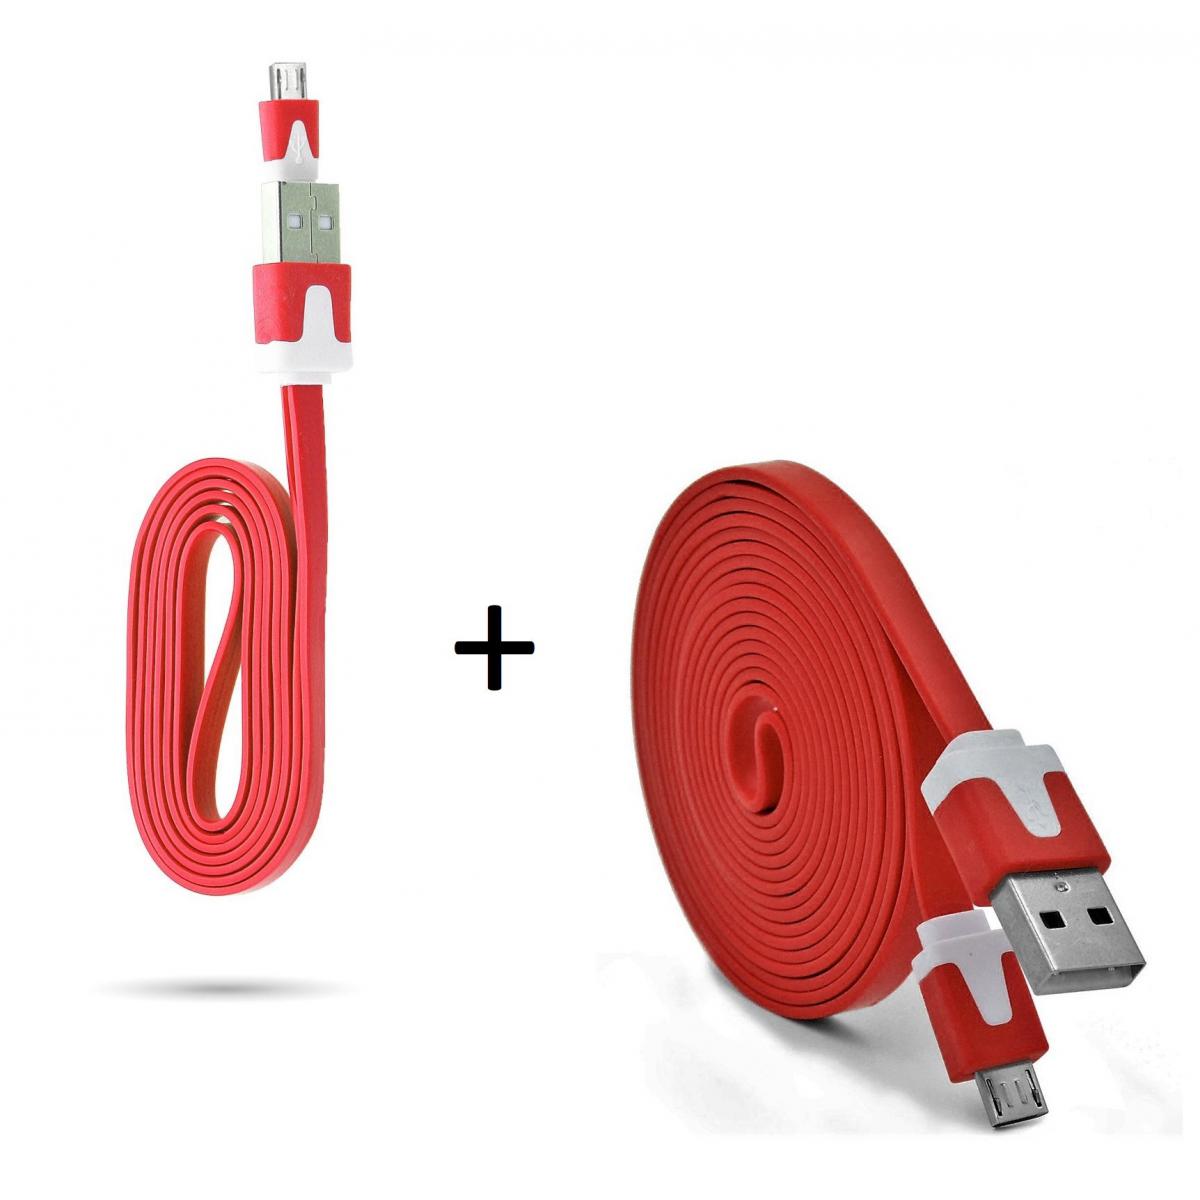 Shot - Pack Chargeur pour Ultimate Ears BOOM 3 Smartphone Micro USB (Cable Noodle 3m + Cable Noodle 1m) Android (ROUGE) - Chargeur secteur téléphone